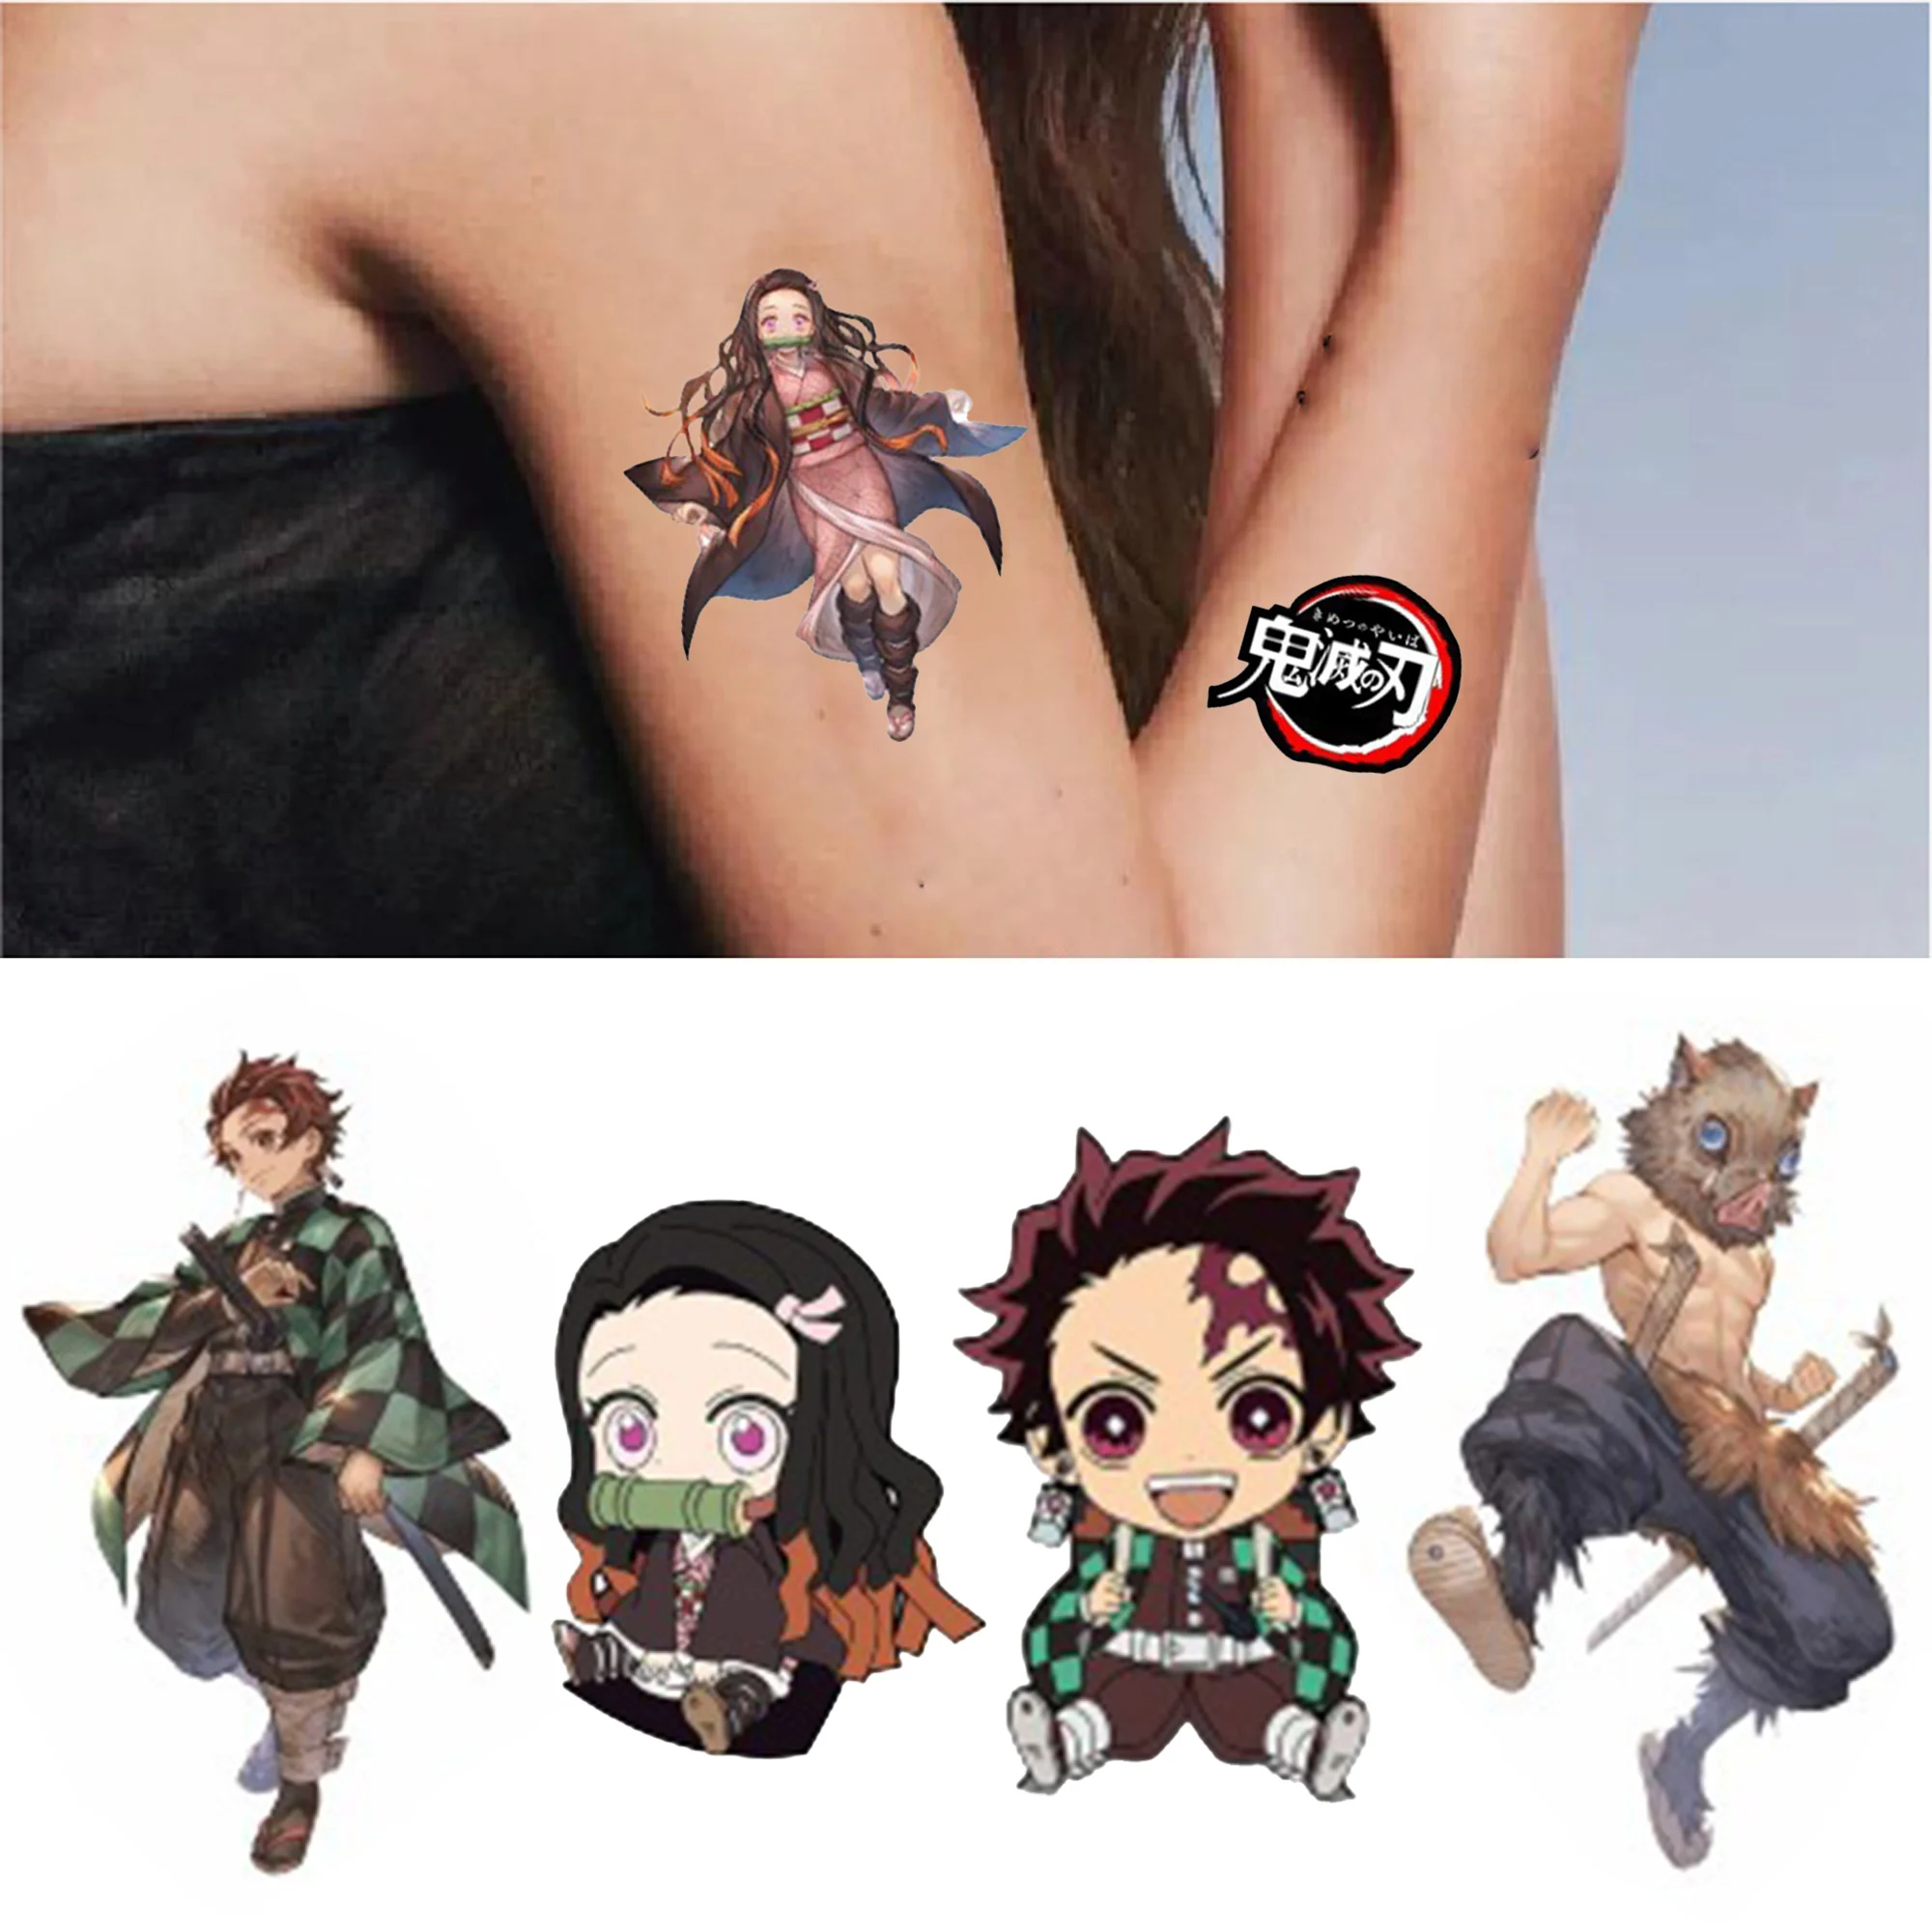 

Anime Demon Slayer Kimetsu No Yaiba Fake Tattoo Sticker Temporary Tattoos Waterproof Tatto Art Tatoo Hand Arm for Kids Gift